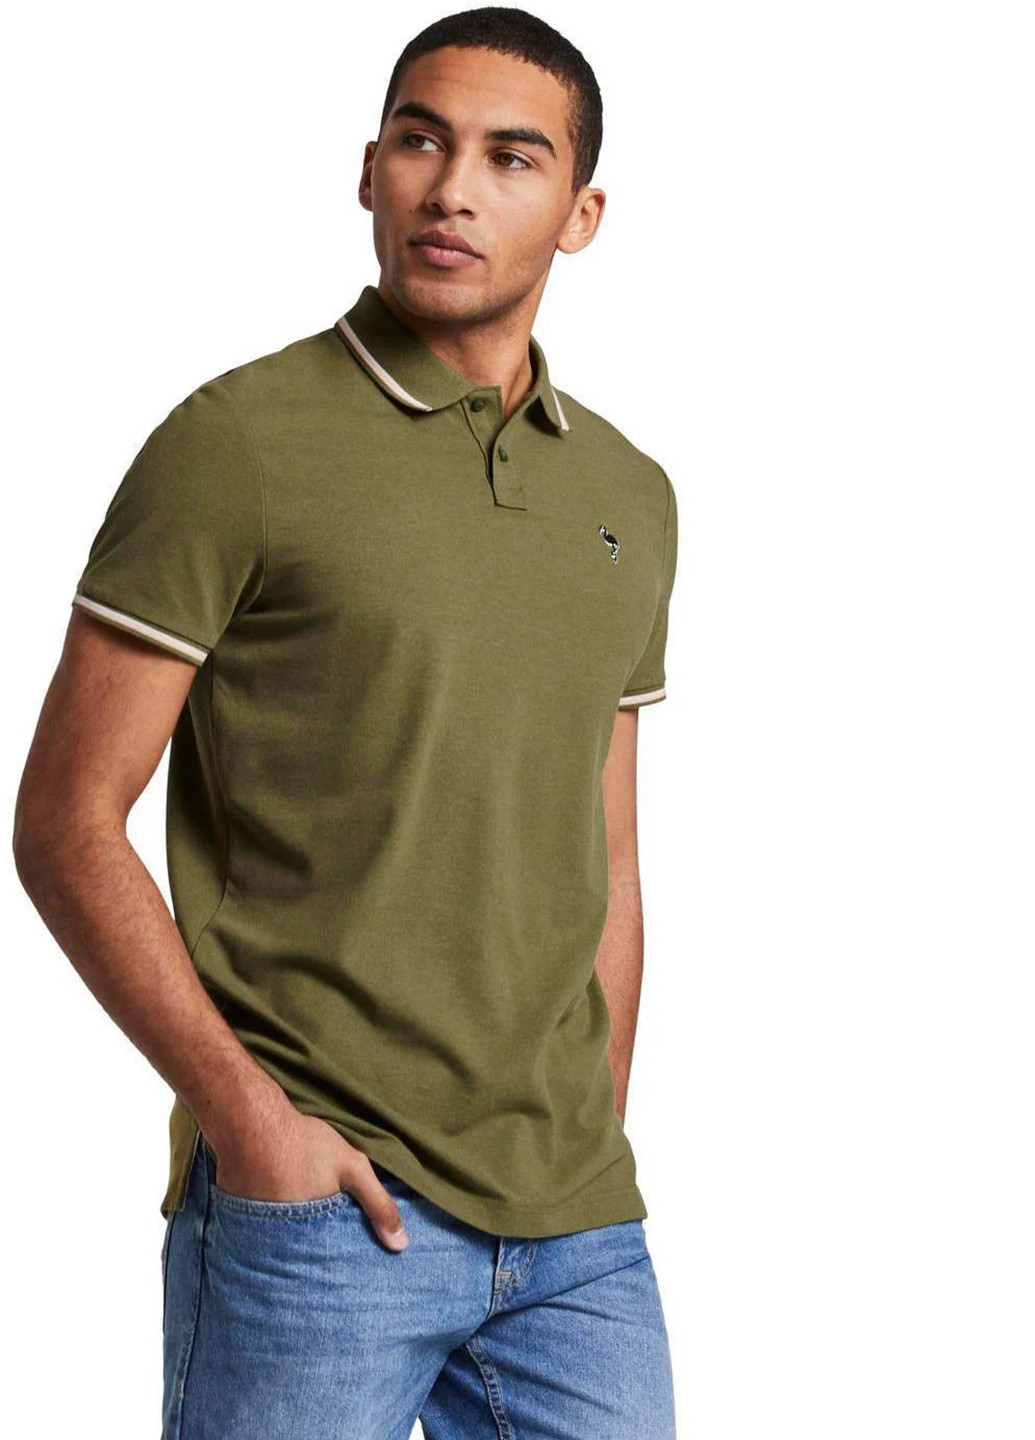 Оливковая (хаки) футболка-поло для мужчин Tom Tailor однотонная